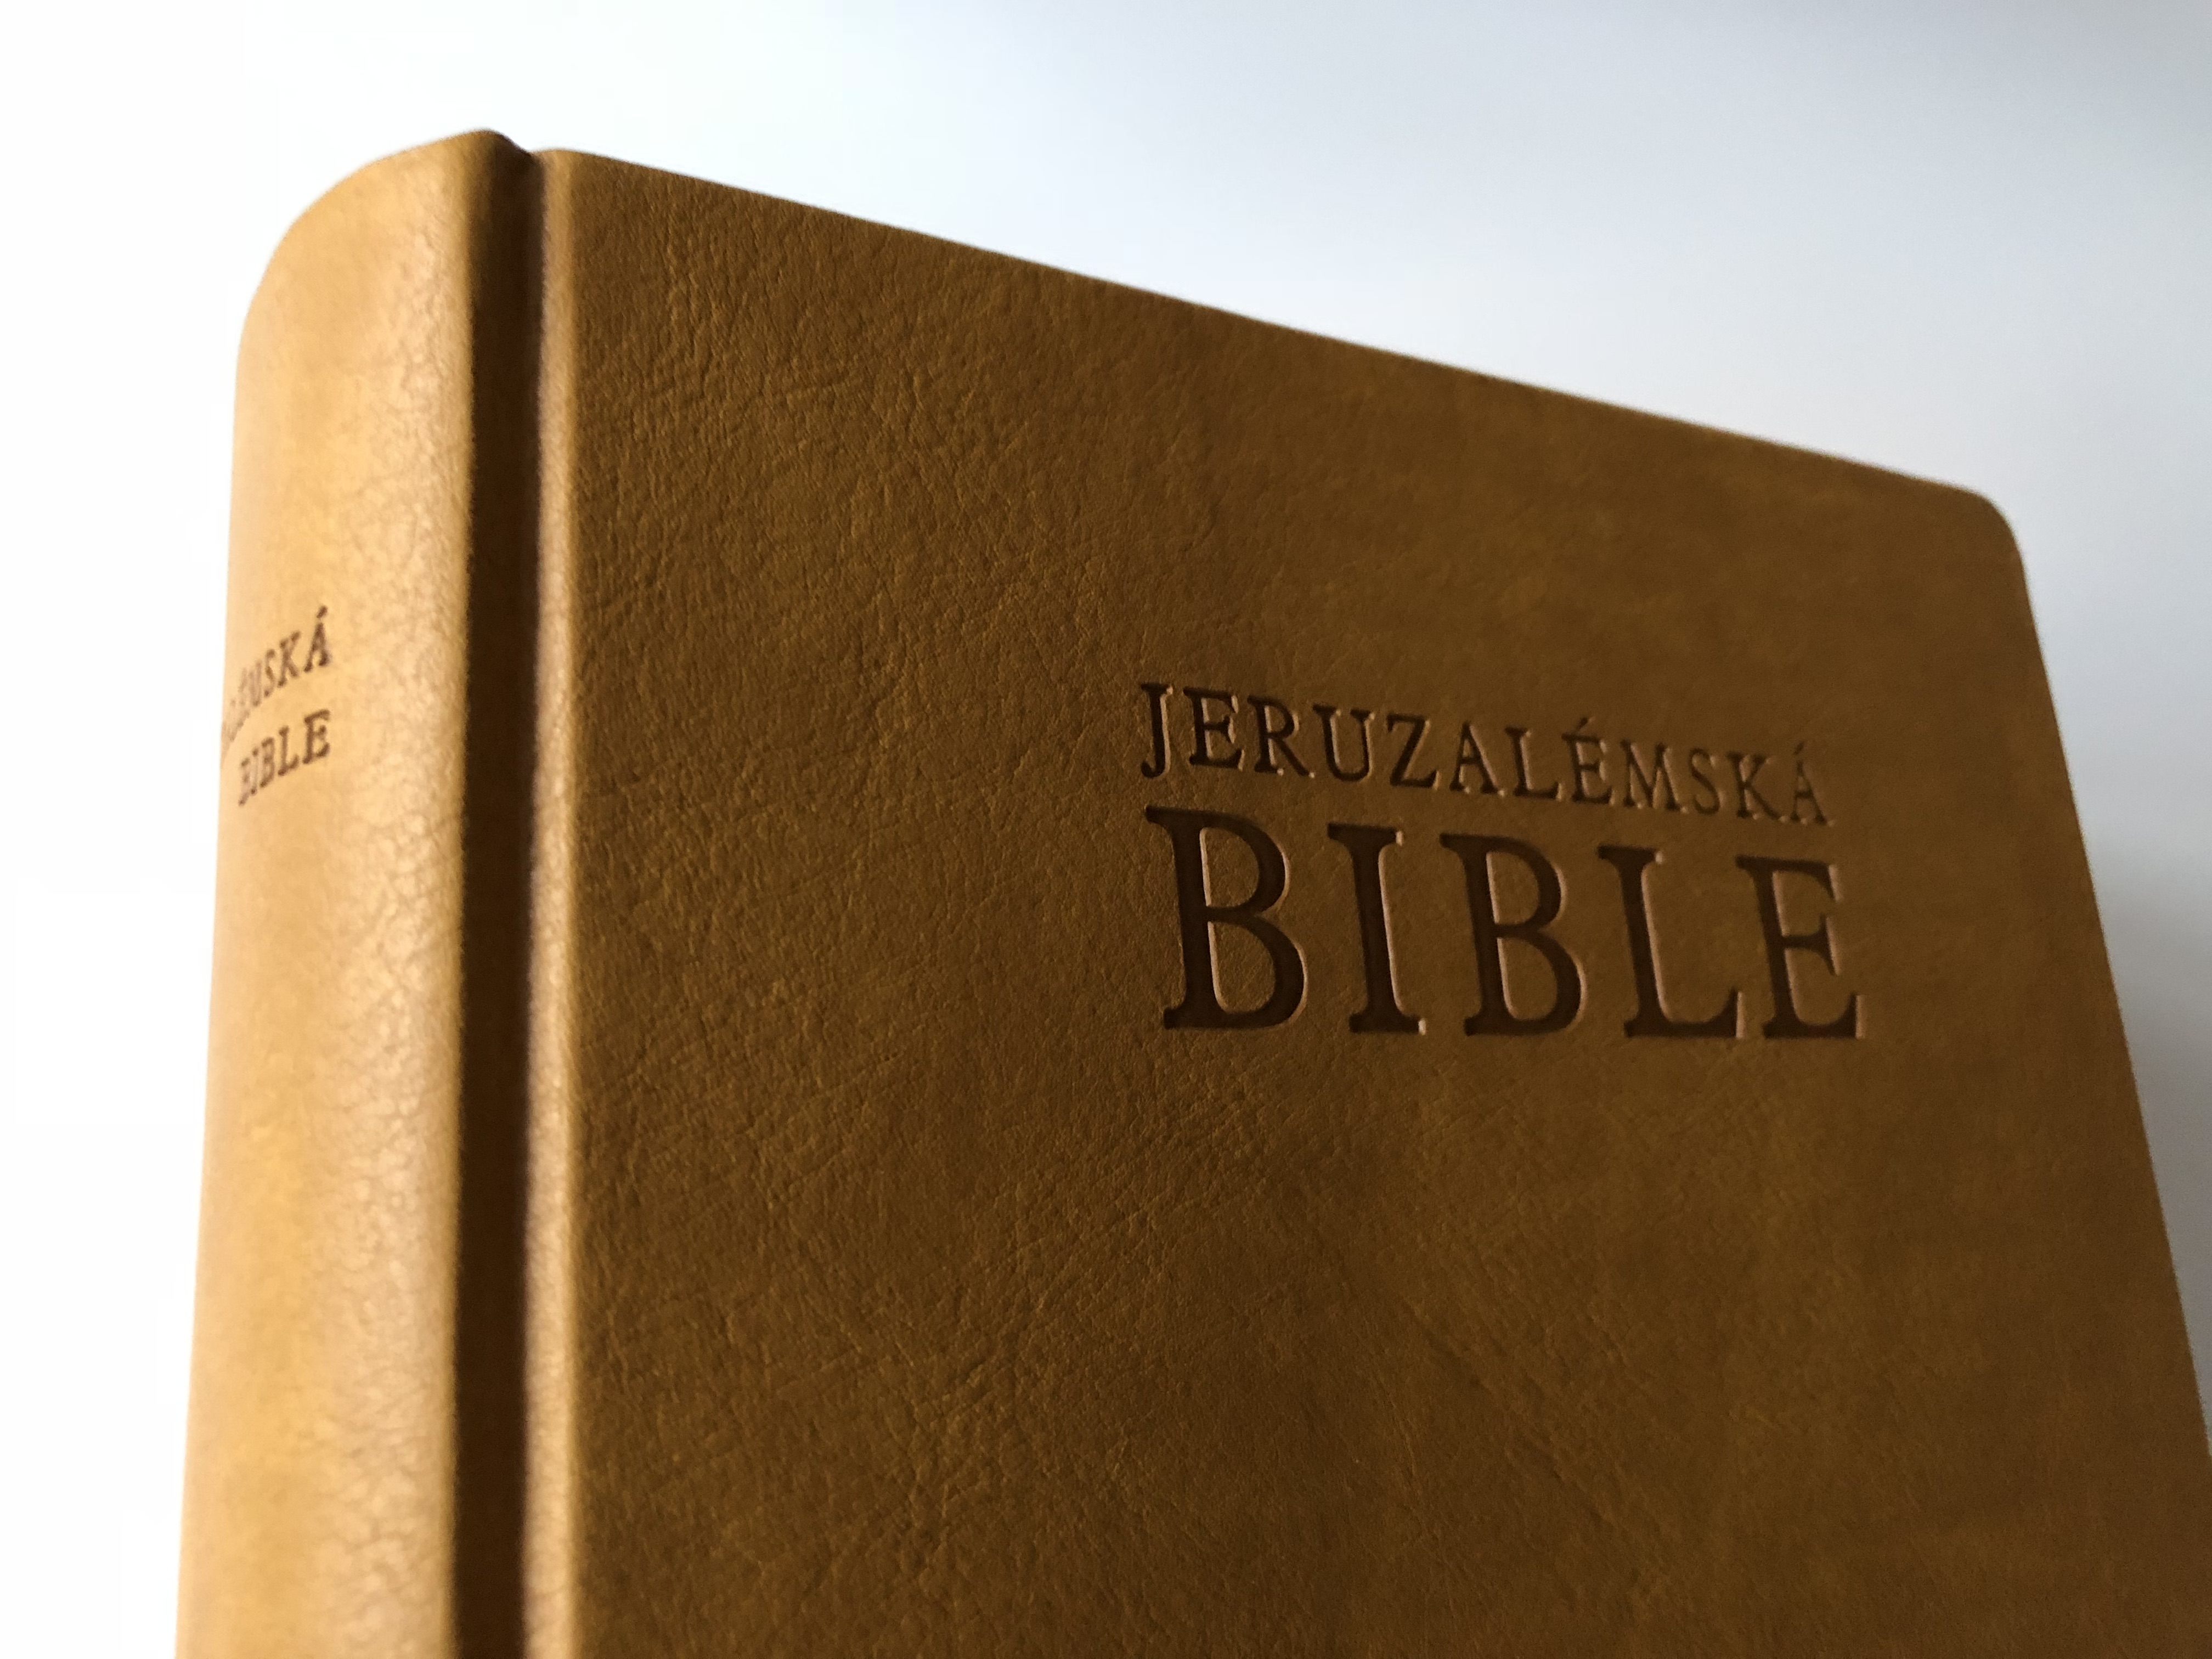 the-jerusalem-bible-in-czech-language-jeruzal-msk-bible-p-smo-svat-vydan-jeruzal-mskou-biblickou-kolou-leather-bound-with-golden-edges-thumb-index-contains-deuterocanonical-books-2-.jpg